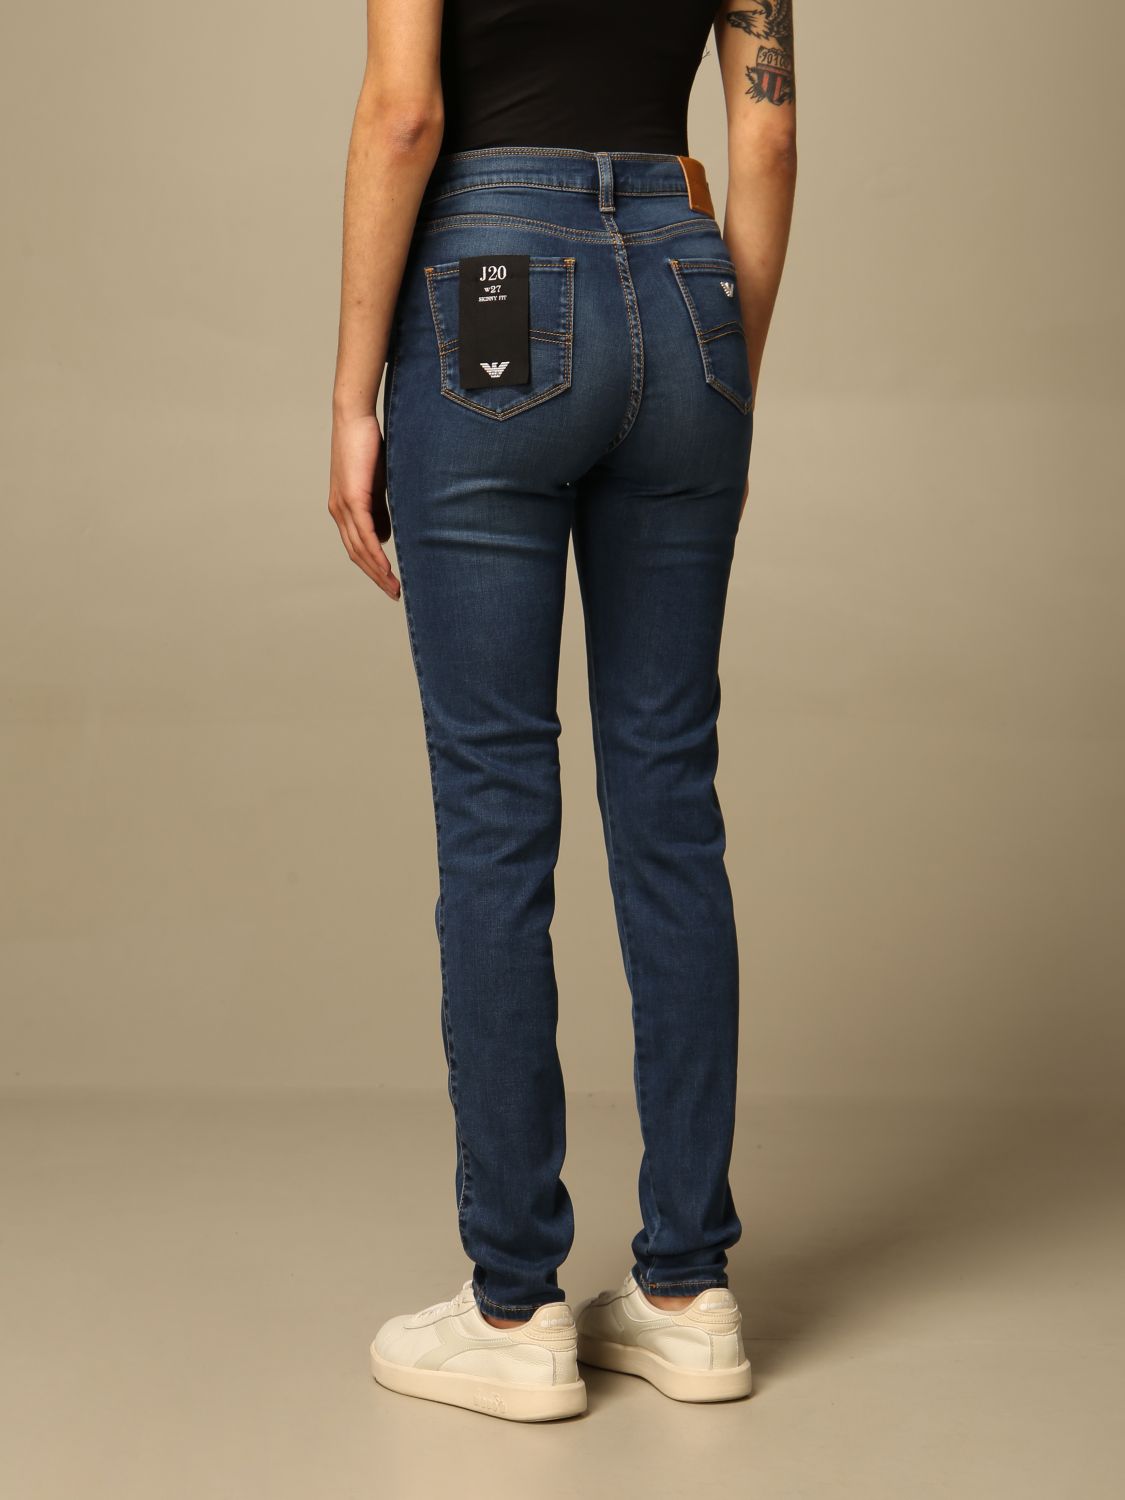 Damen Jeans - Stone Washed | Emporio Armani Jeans 3K2J20 2DG6Z online auf GIGLIO.COM